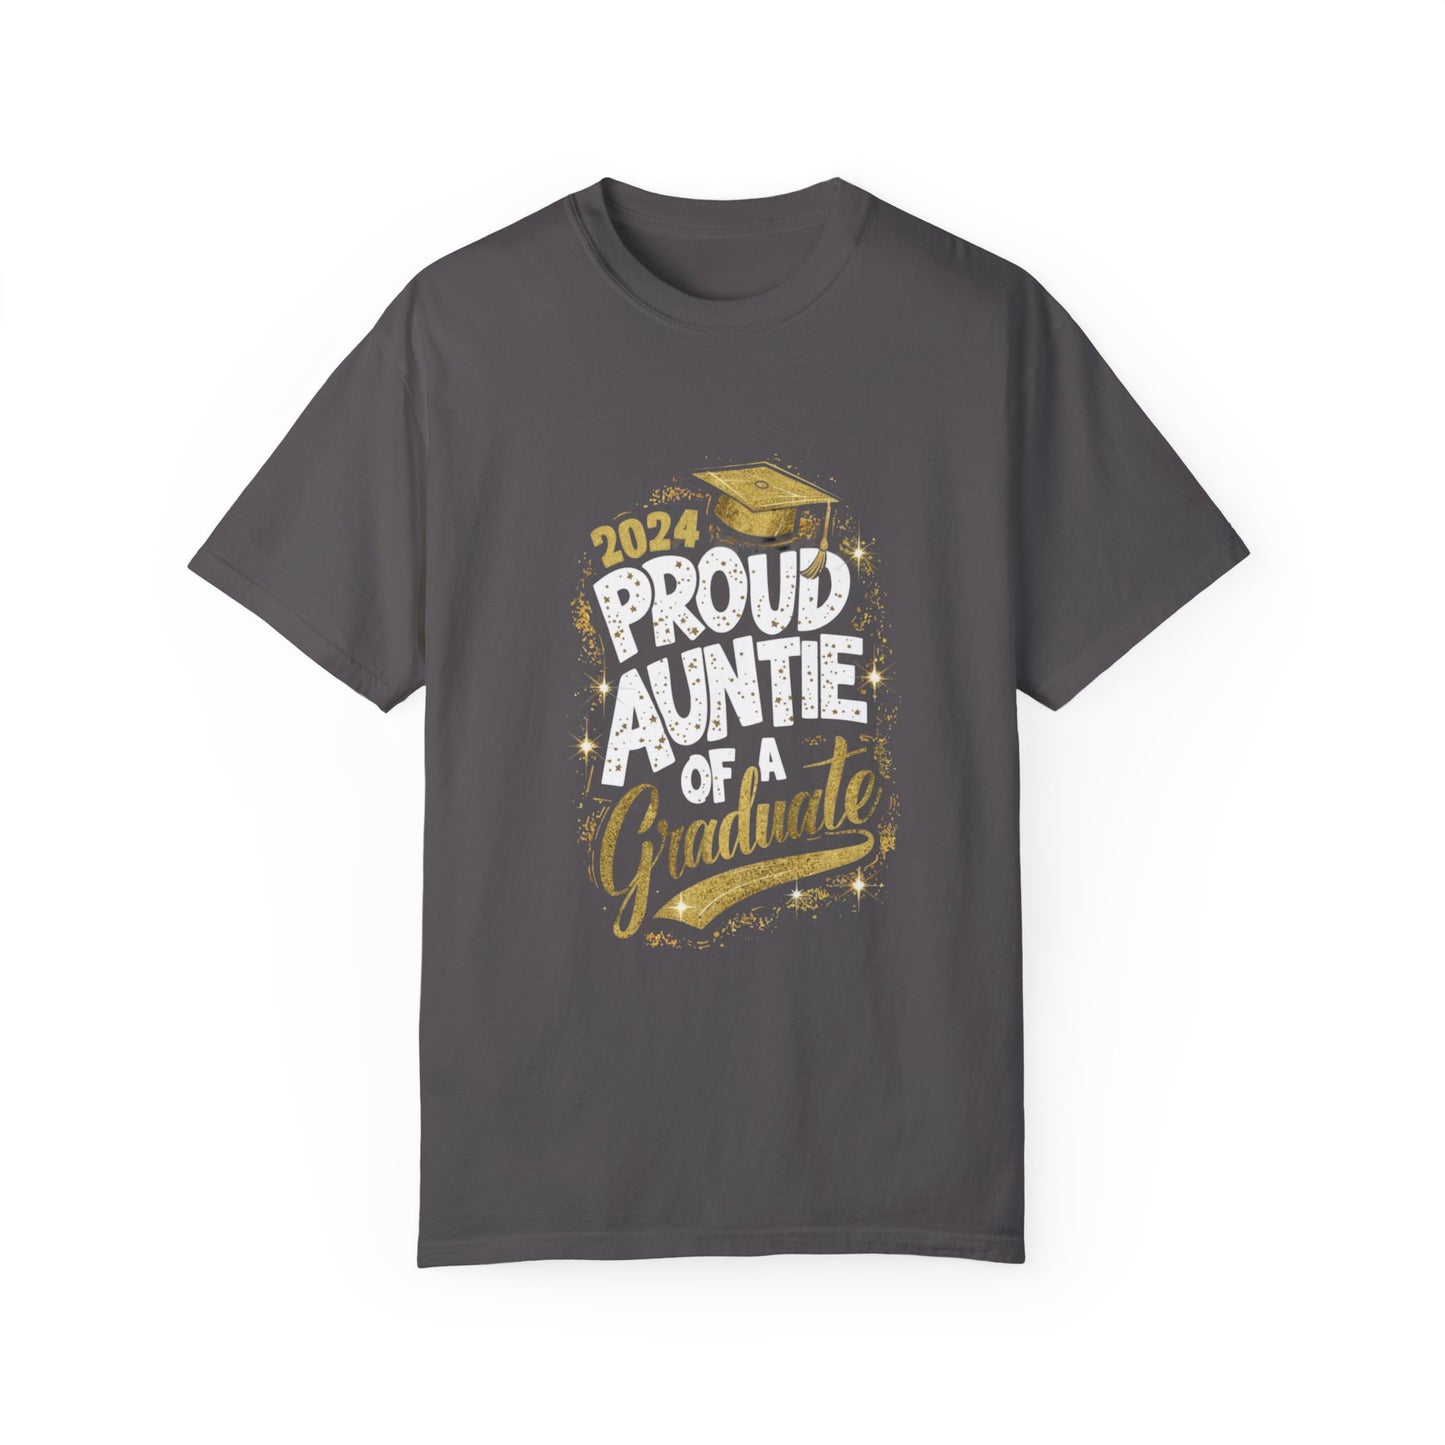 Proud Auntie of a 2024 Graduate Unisex Garment-dyed T-shirt Cotton Funny Humorous Graphic Soft Premium Unisex Men Women Graphite T-shirt Birthday Gift-8